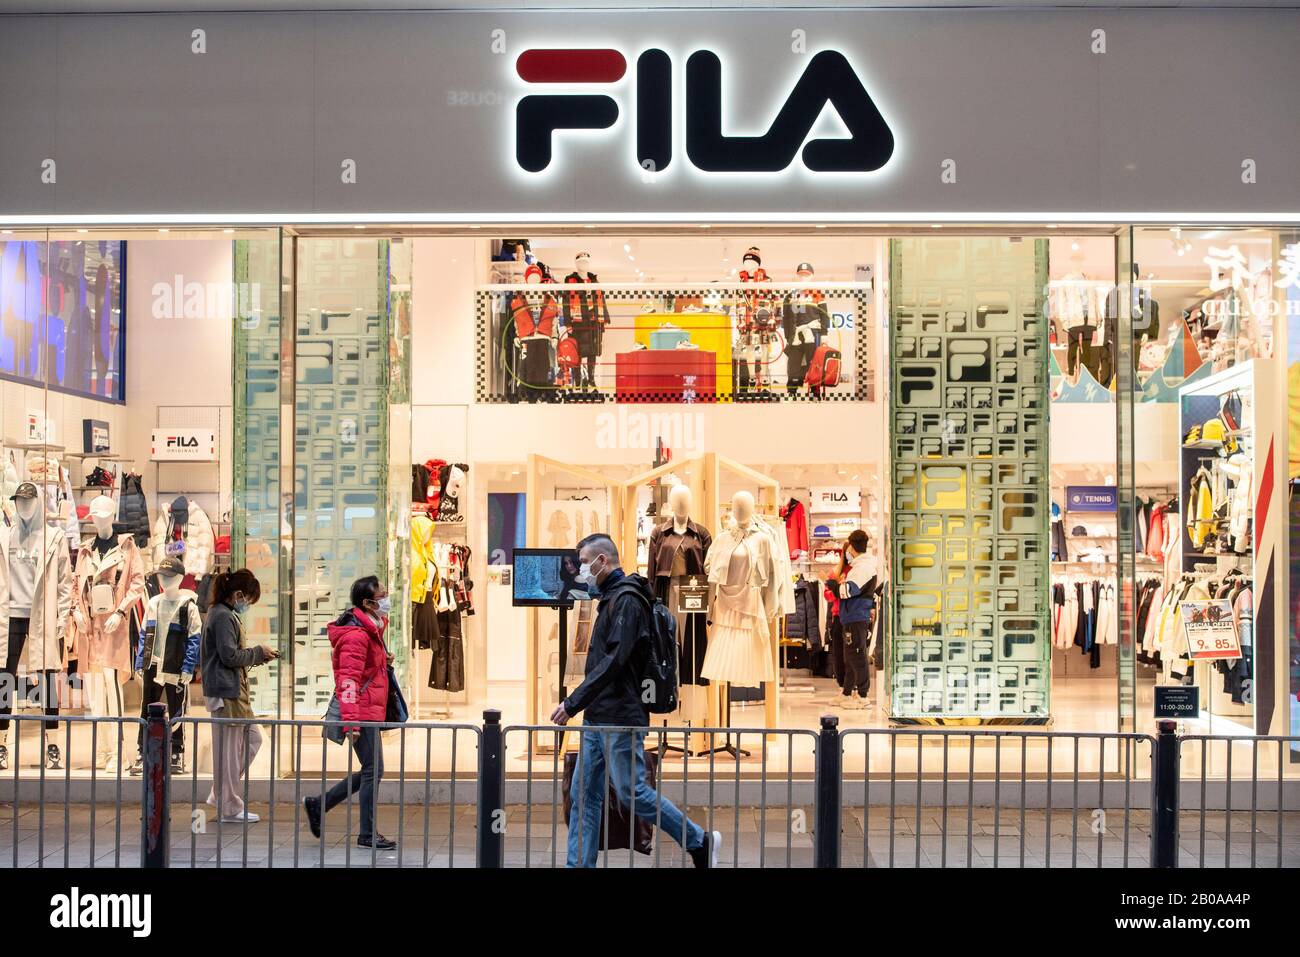 Italian goods brand Fila store seen Hong Kong Stock Photo - Alamy